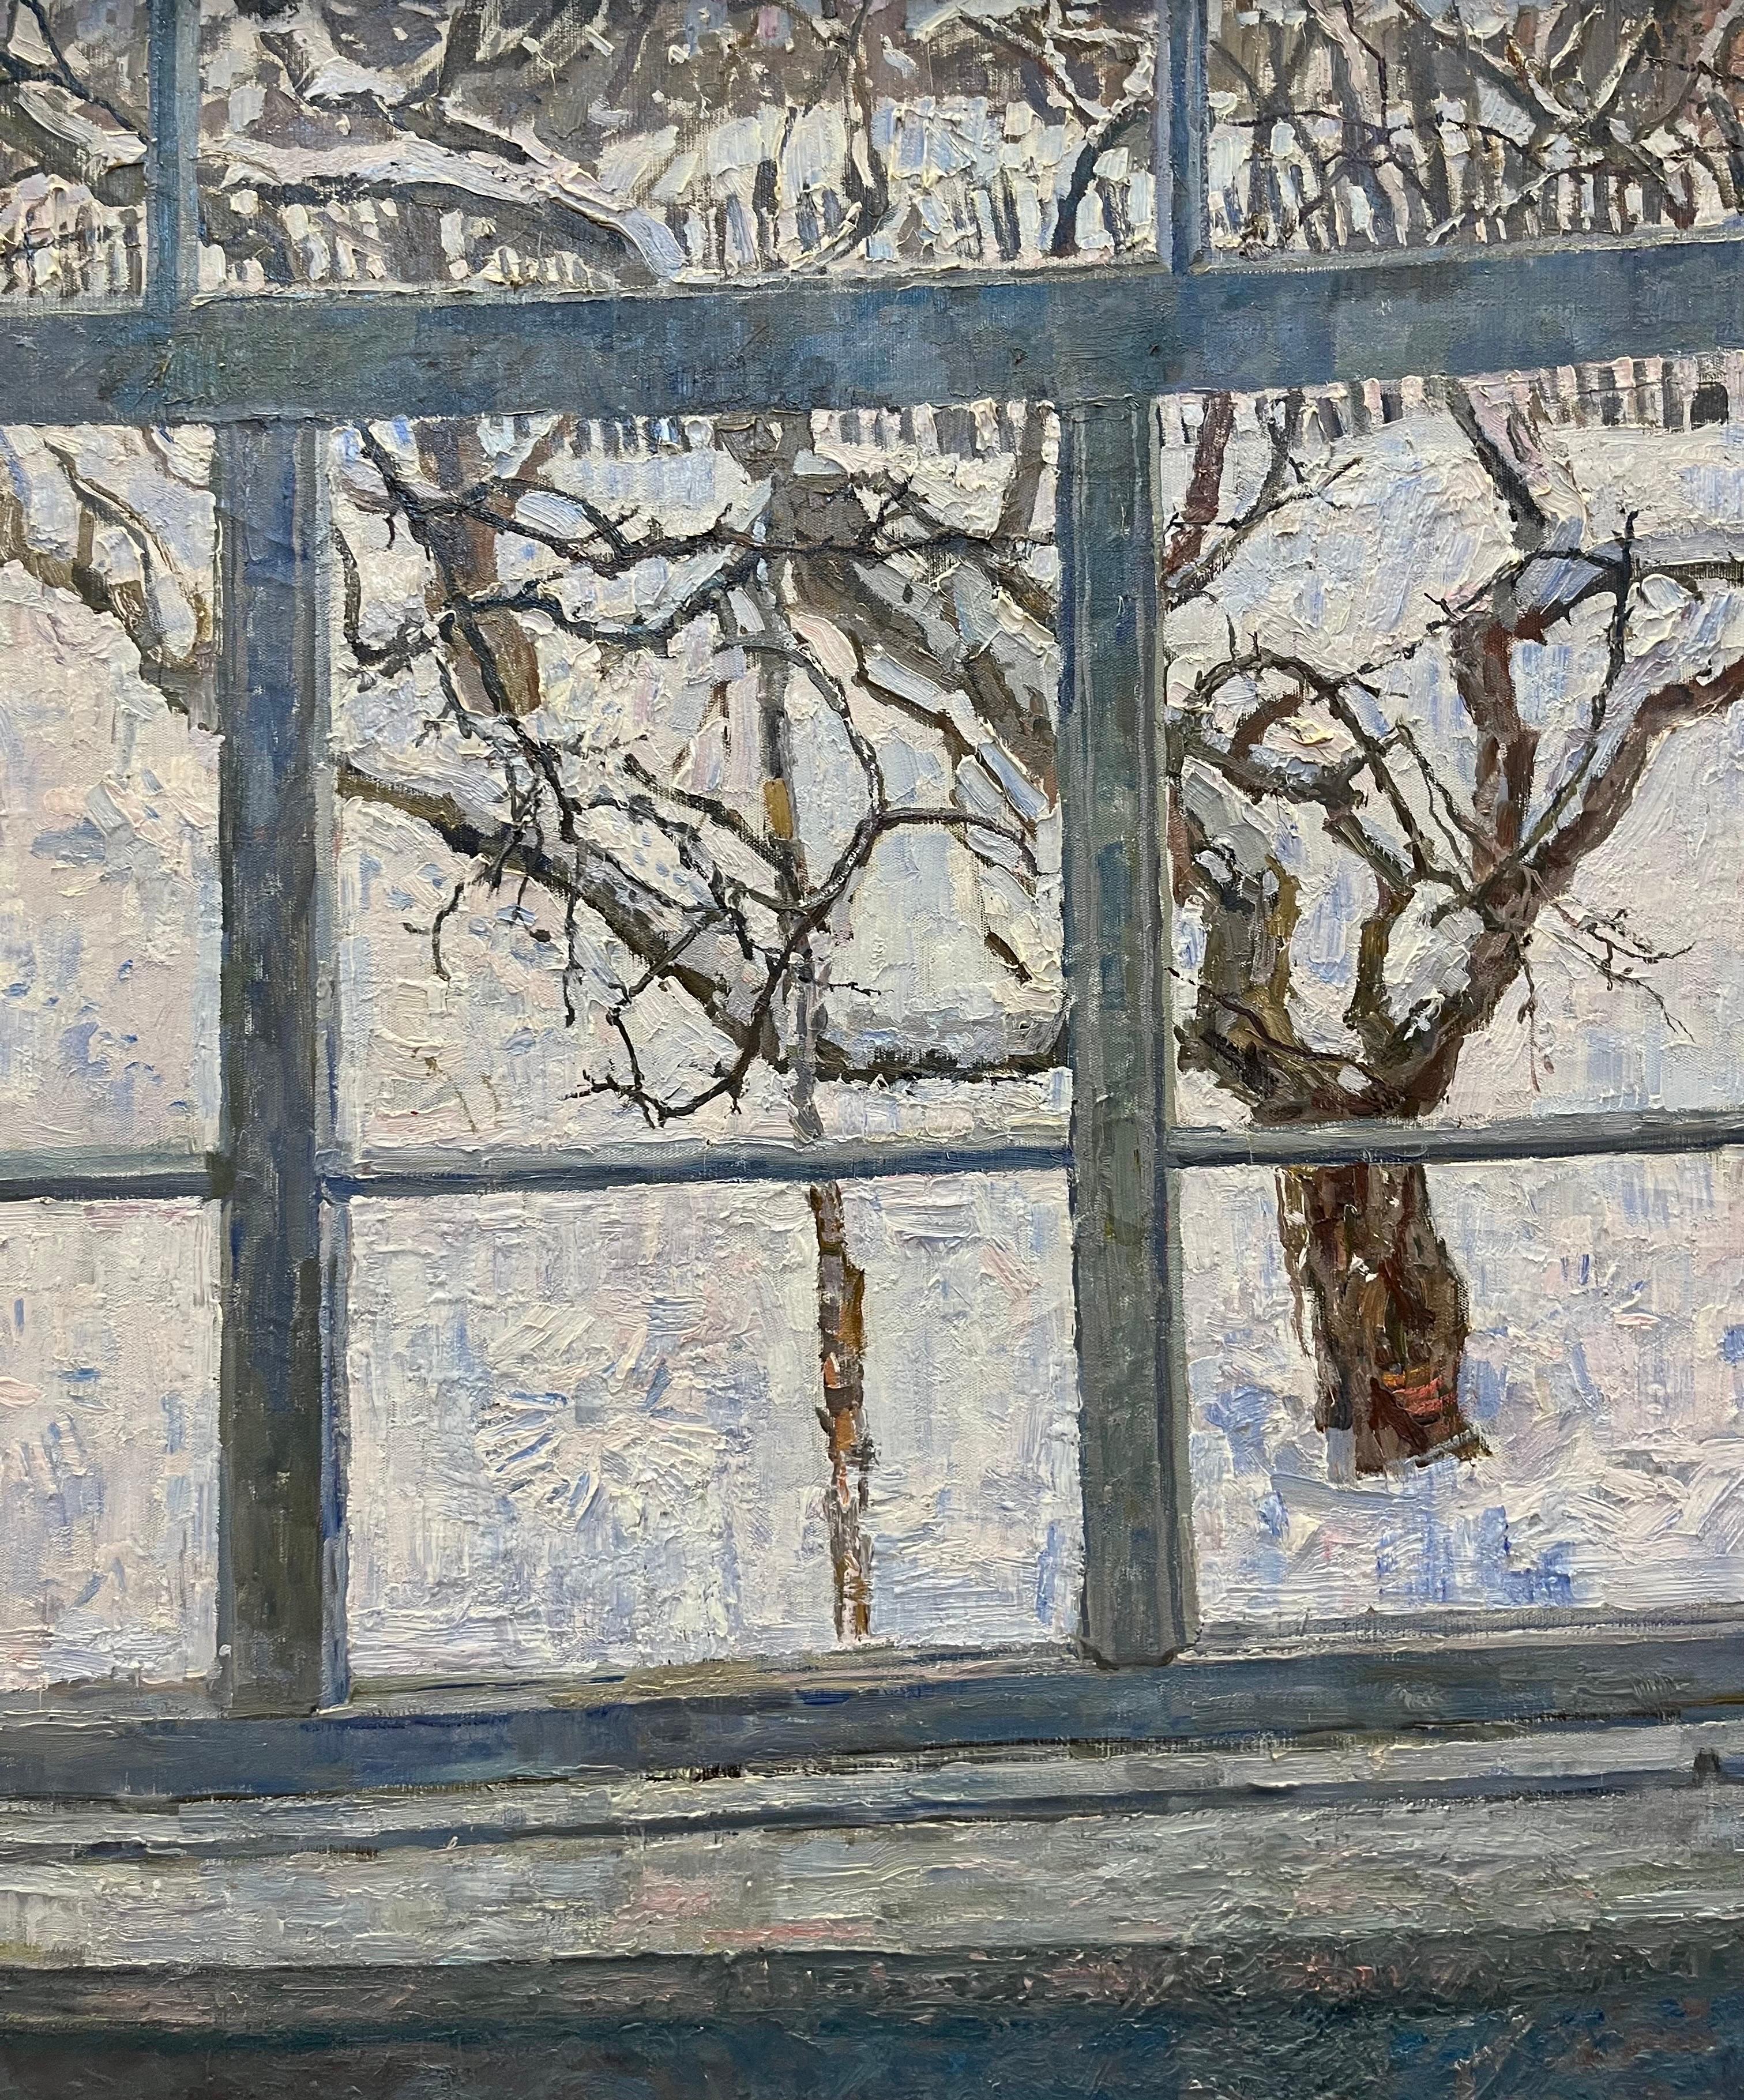 « Jardin d'hiver », huile cm. 115 x 120,1975, fenêtre, hiver - Painting de Maya KOPITZEVA